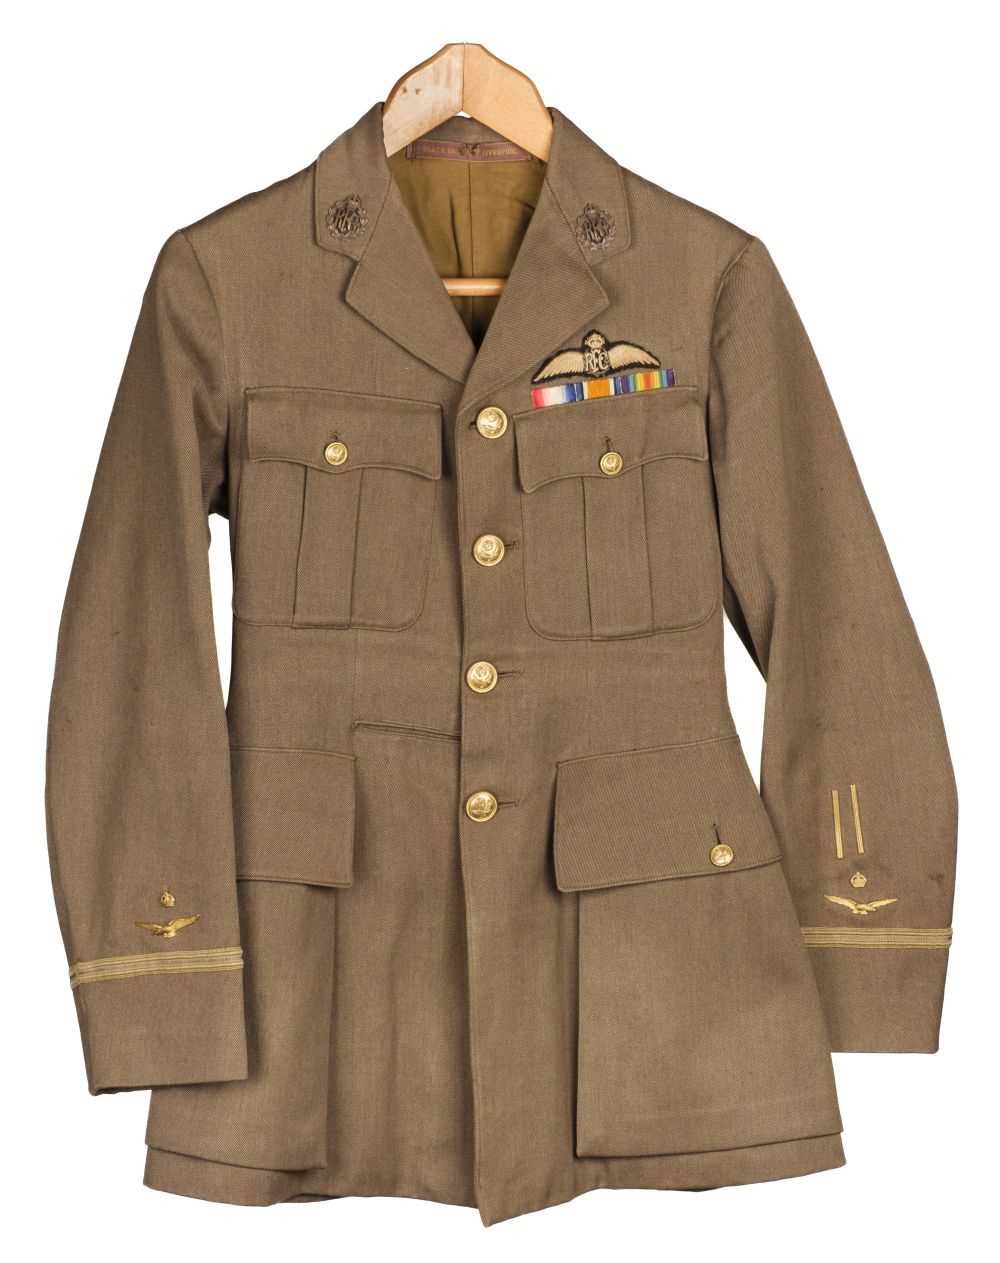 Lot 235 - Royal Flying Corps. A WWI period RFC Observer's uniform